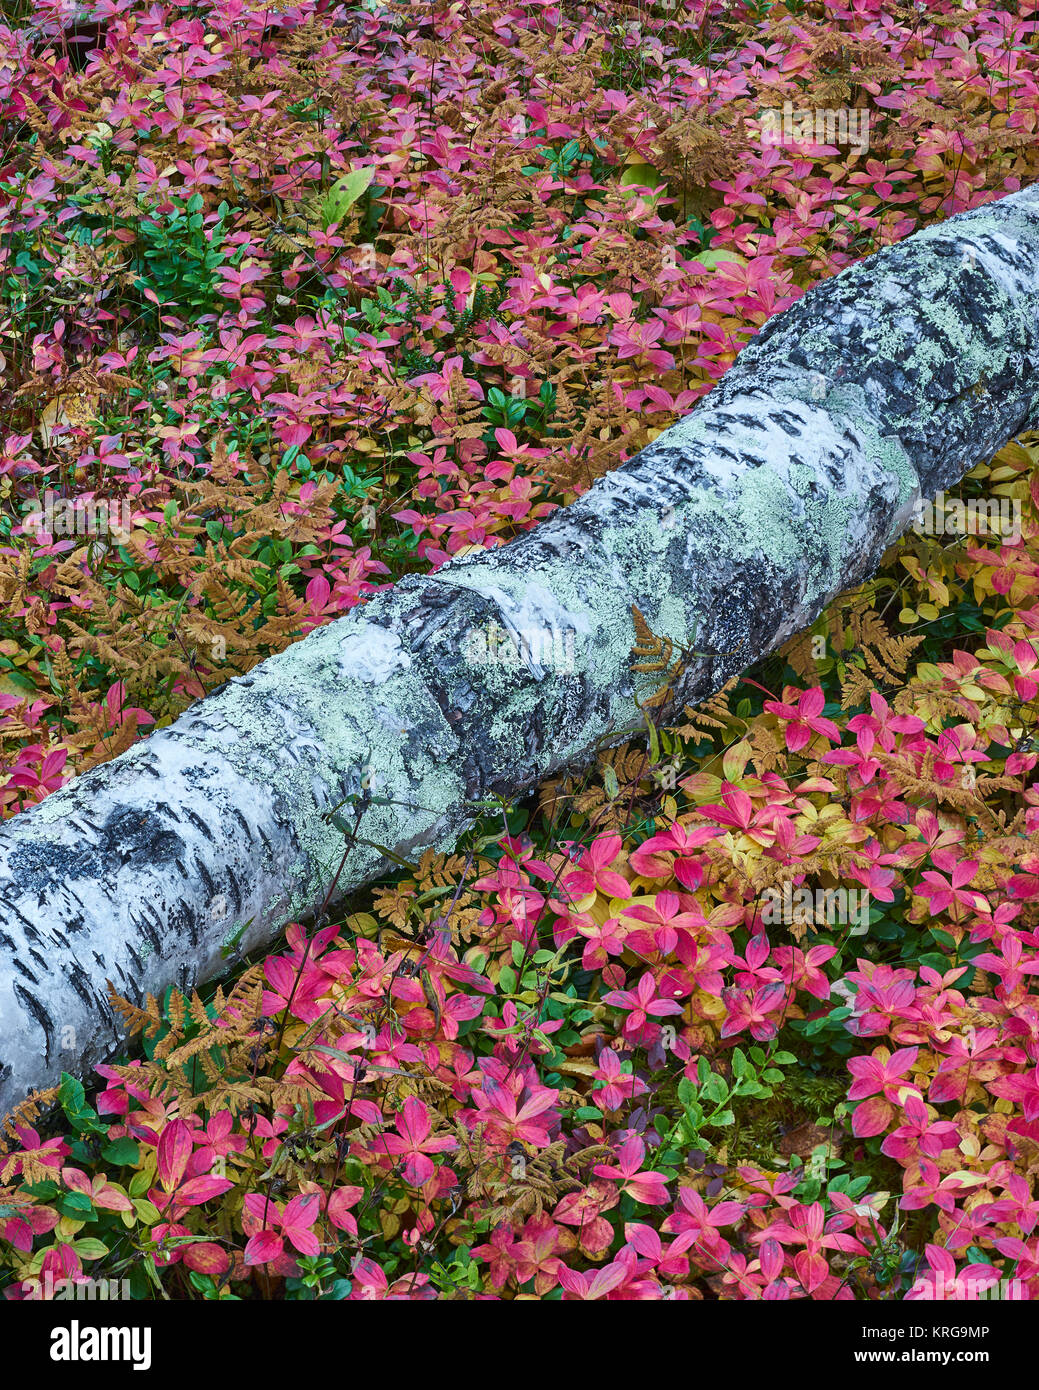 Fallen Silver Birch Tree Trunk et Cornel nain à même le sol forestier, Finnmark, Norvège Banque D'Images